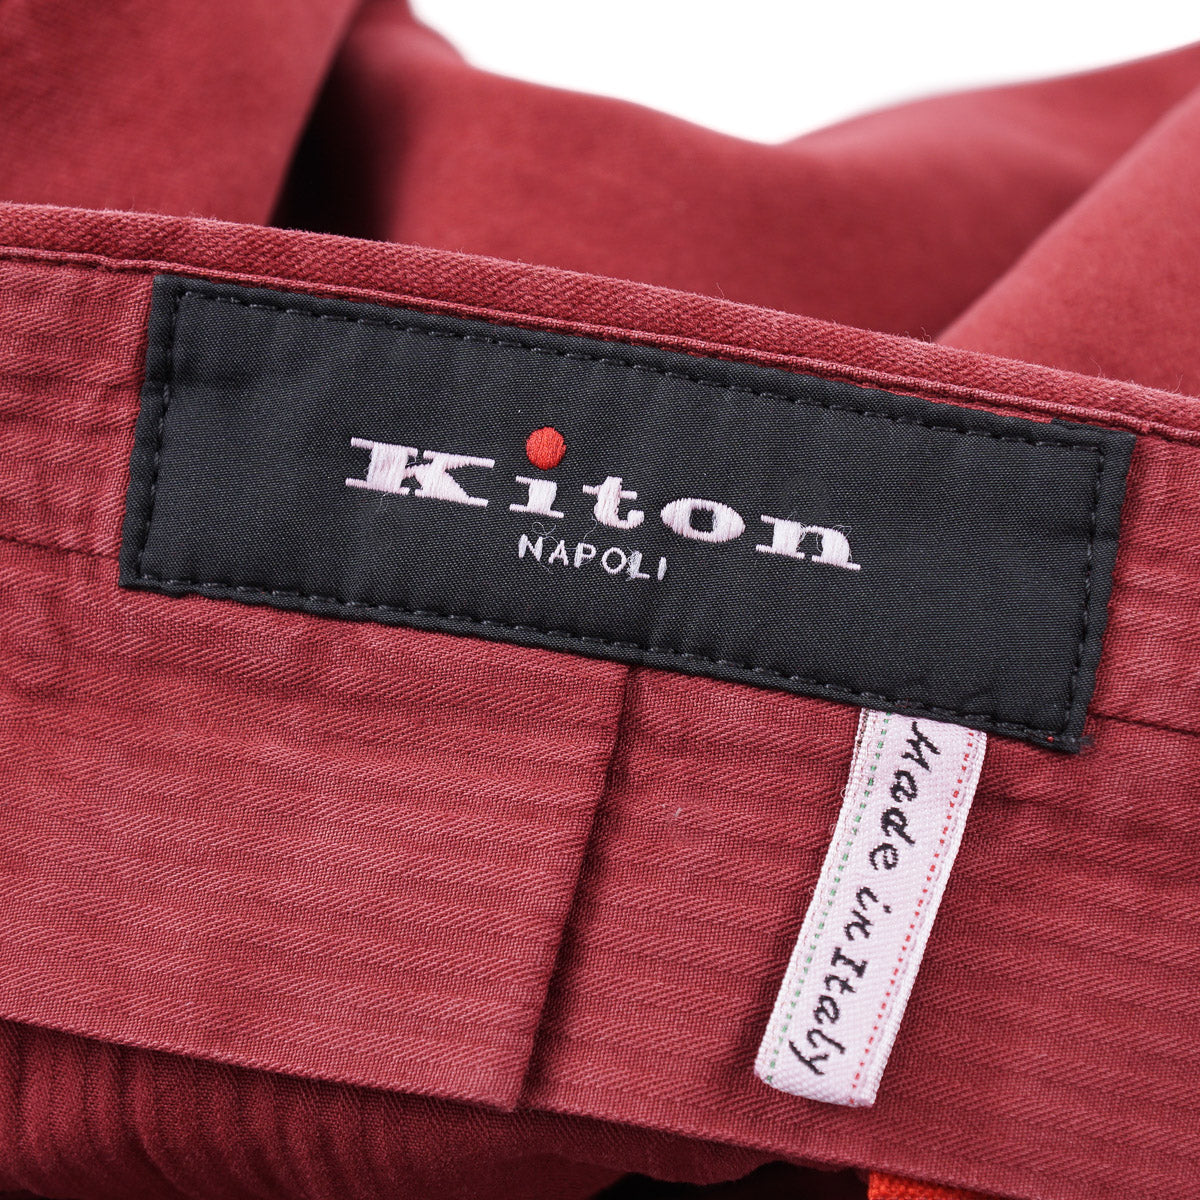 Kiton Brushed Cotton Chino Pants - Top Shelf Apparel